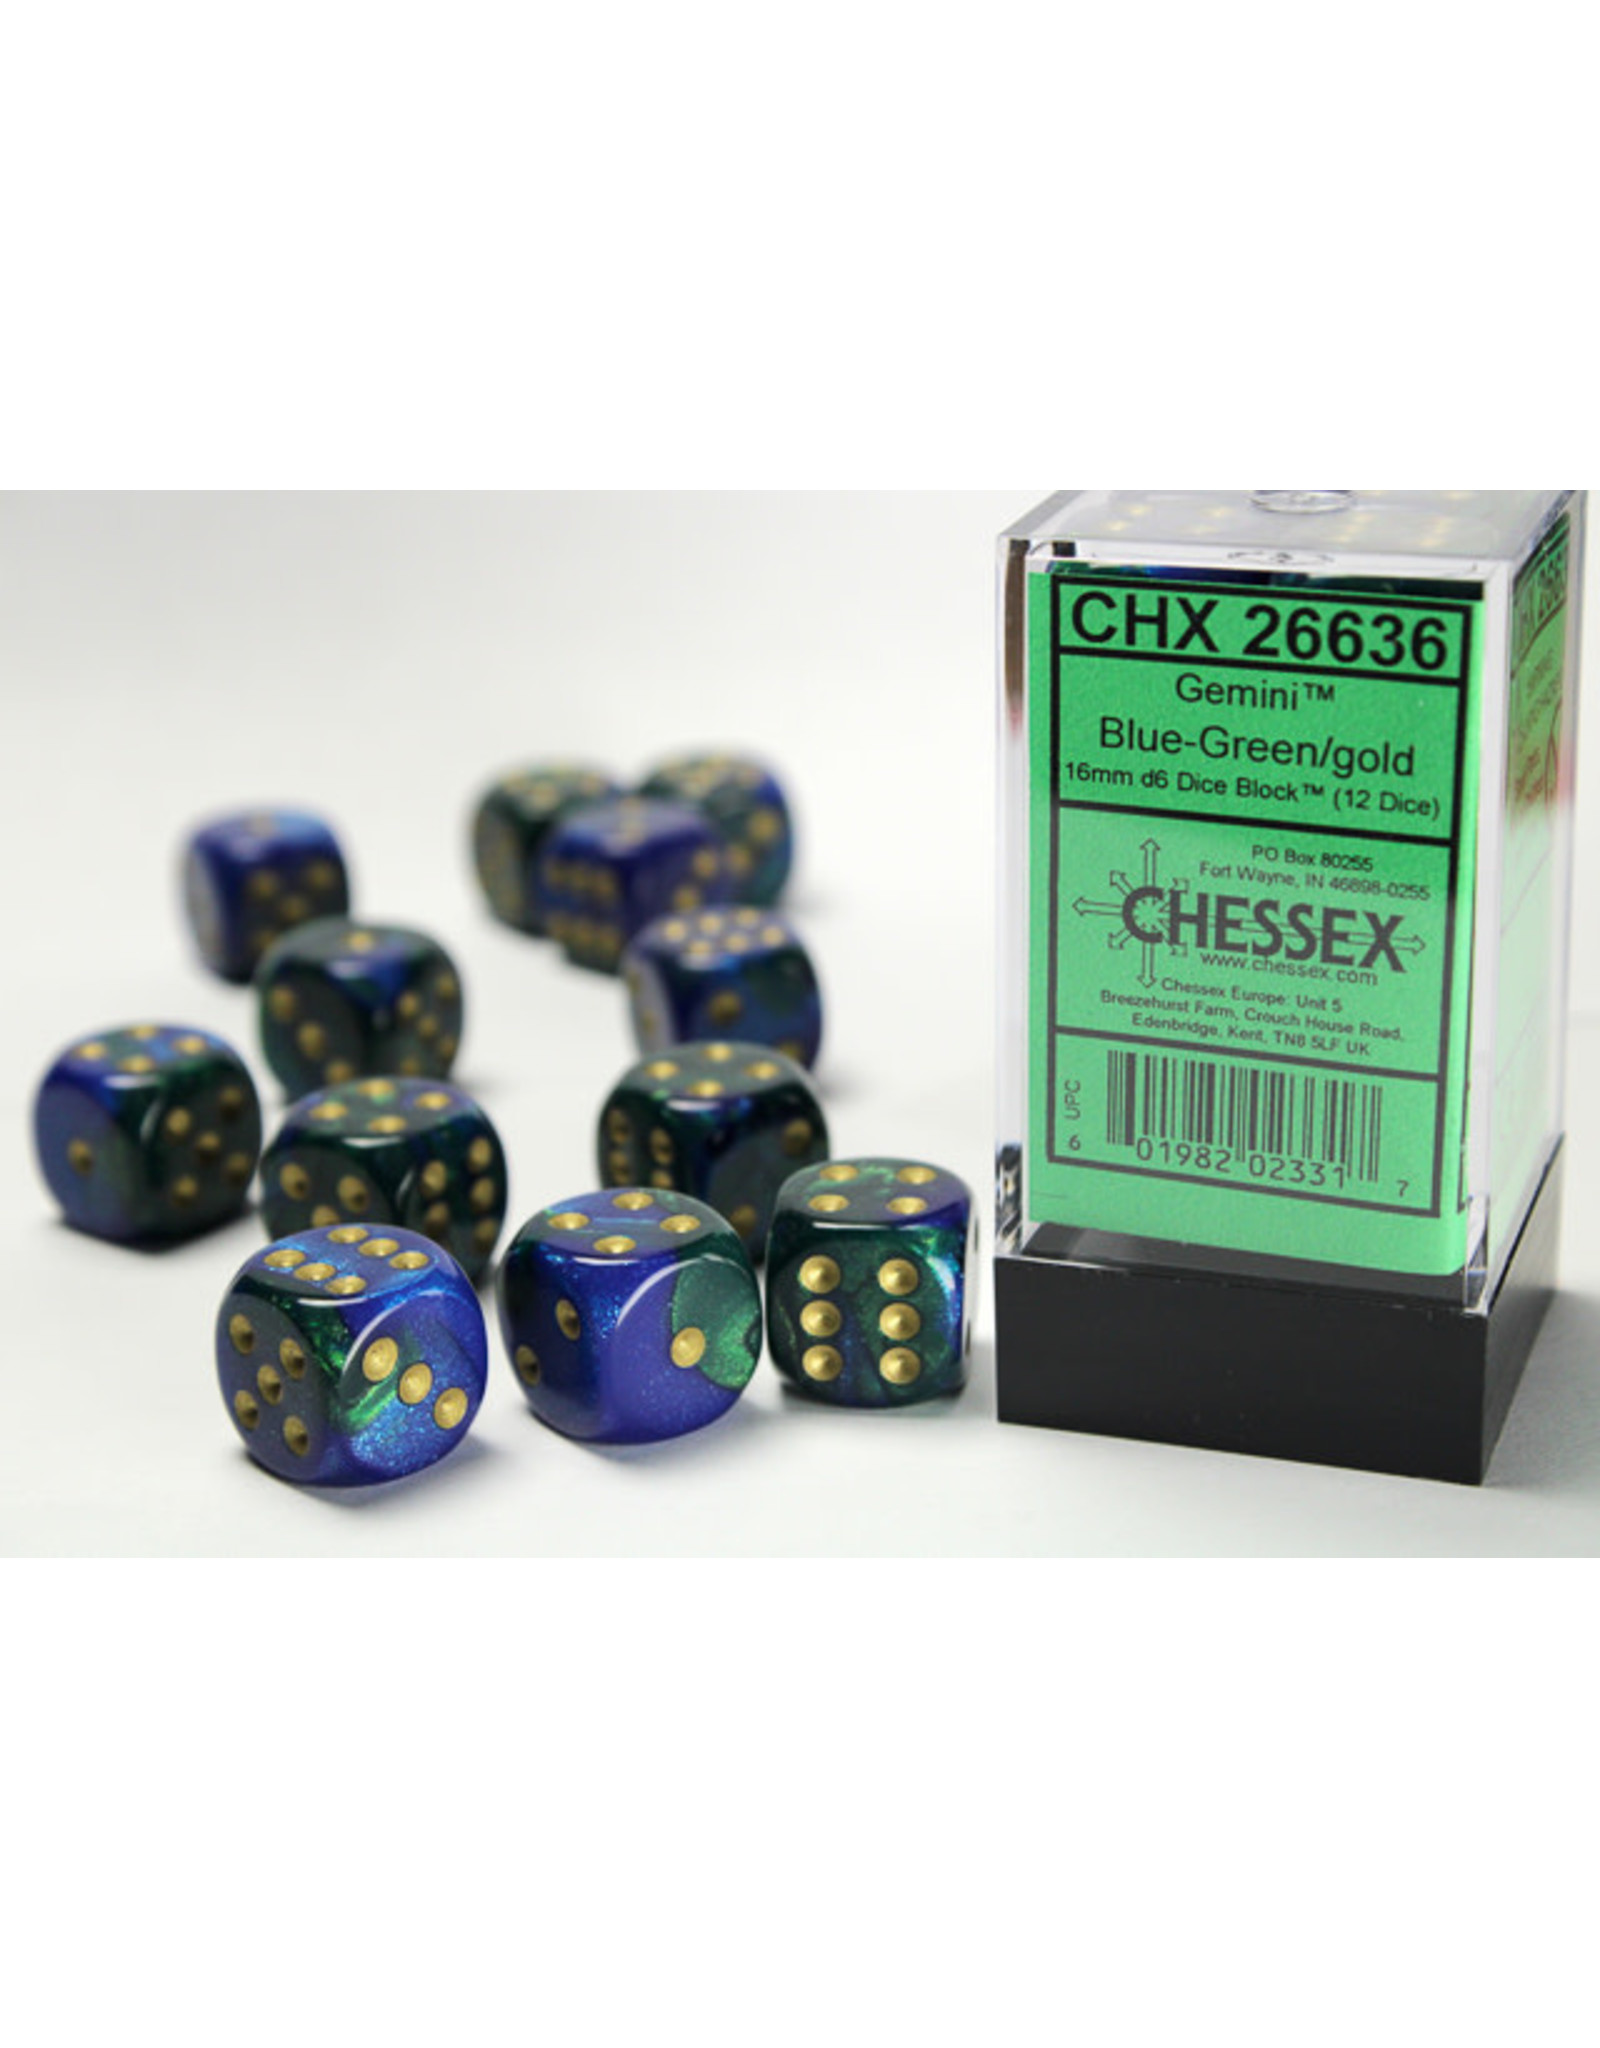 Chessex CHX26636 Gemini 3: 16mm D6 Blue Green Gold/Black (12)